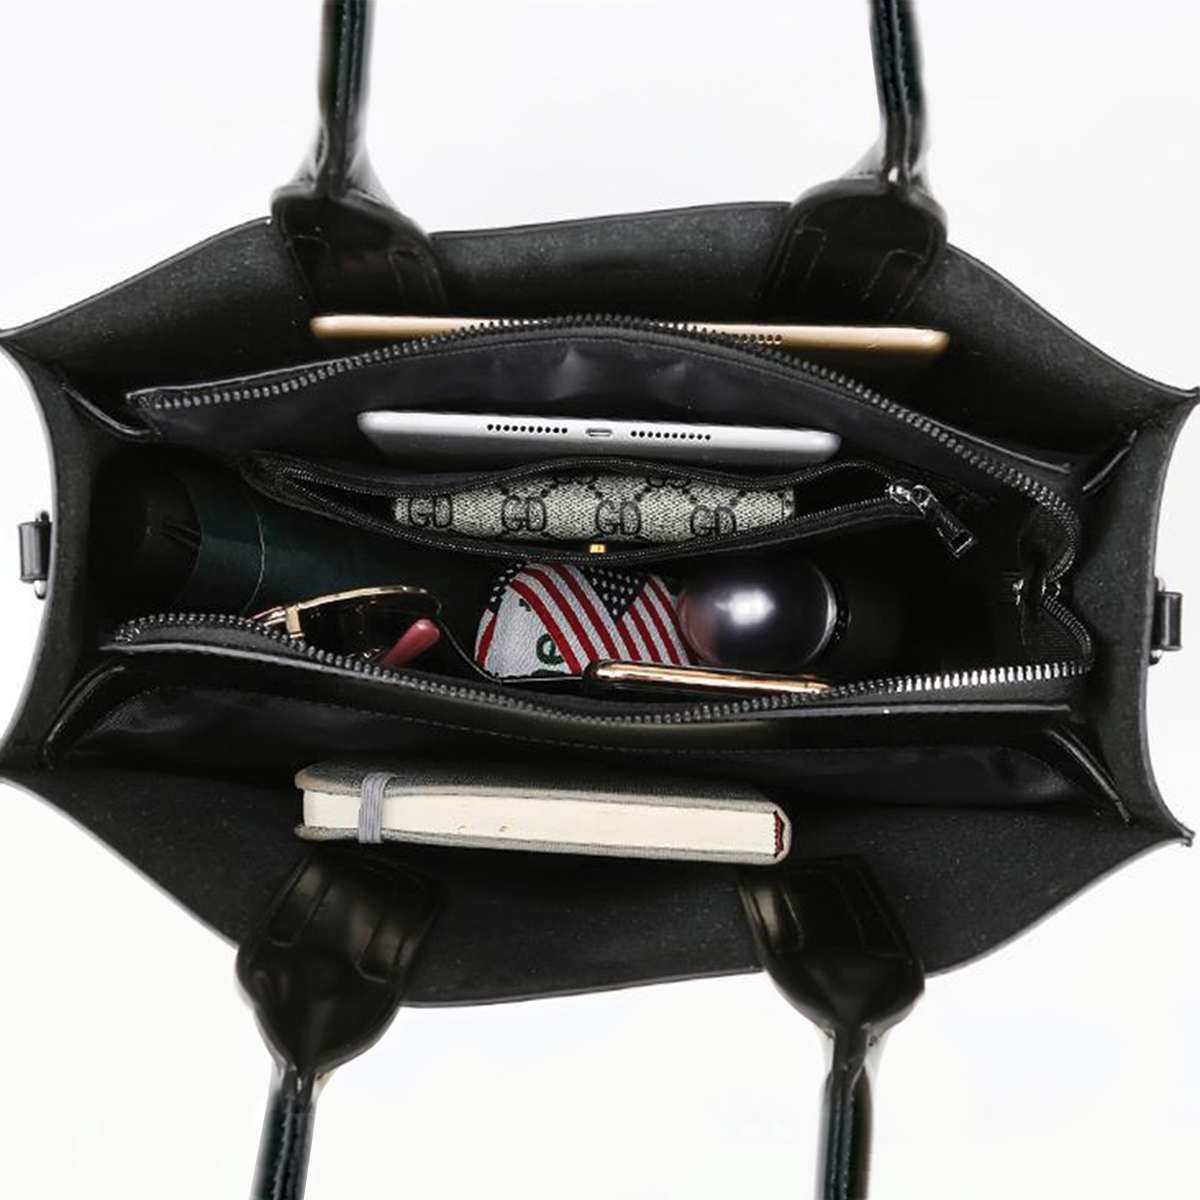 Reduce Stress At Work With Pomeranian - Luxury Handbag V1